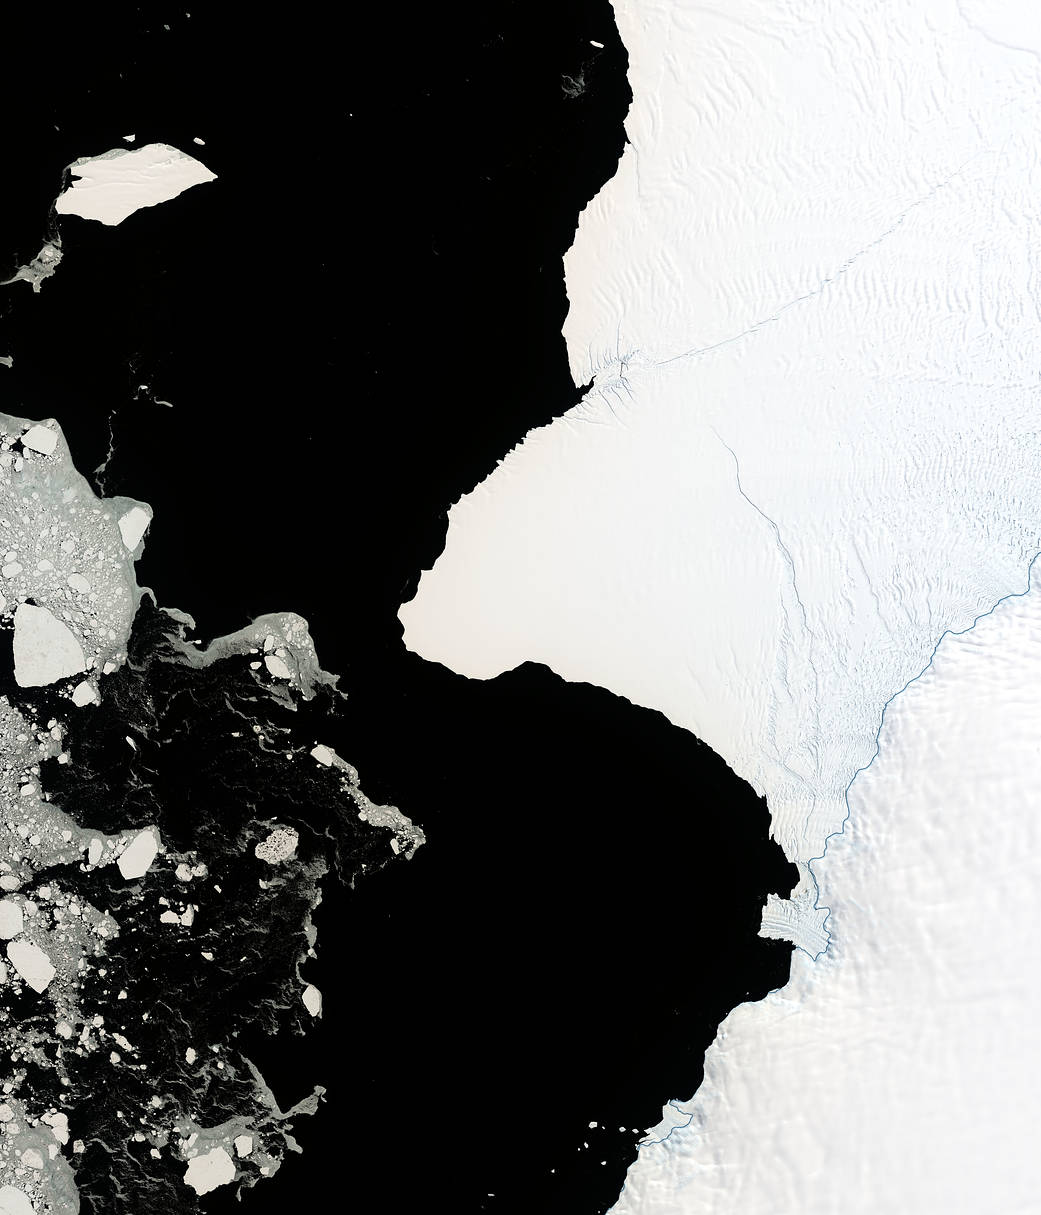 Countdown to Calving at Antarctica's Brunt Ice Shelf